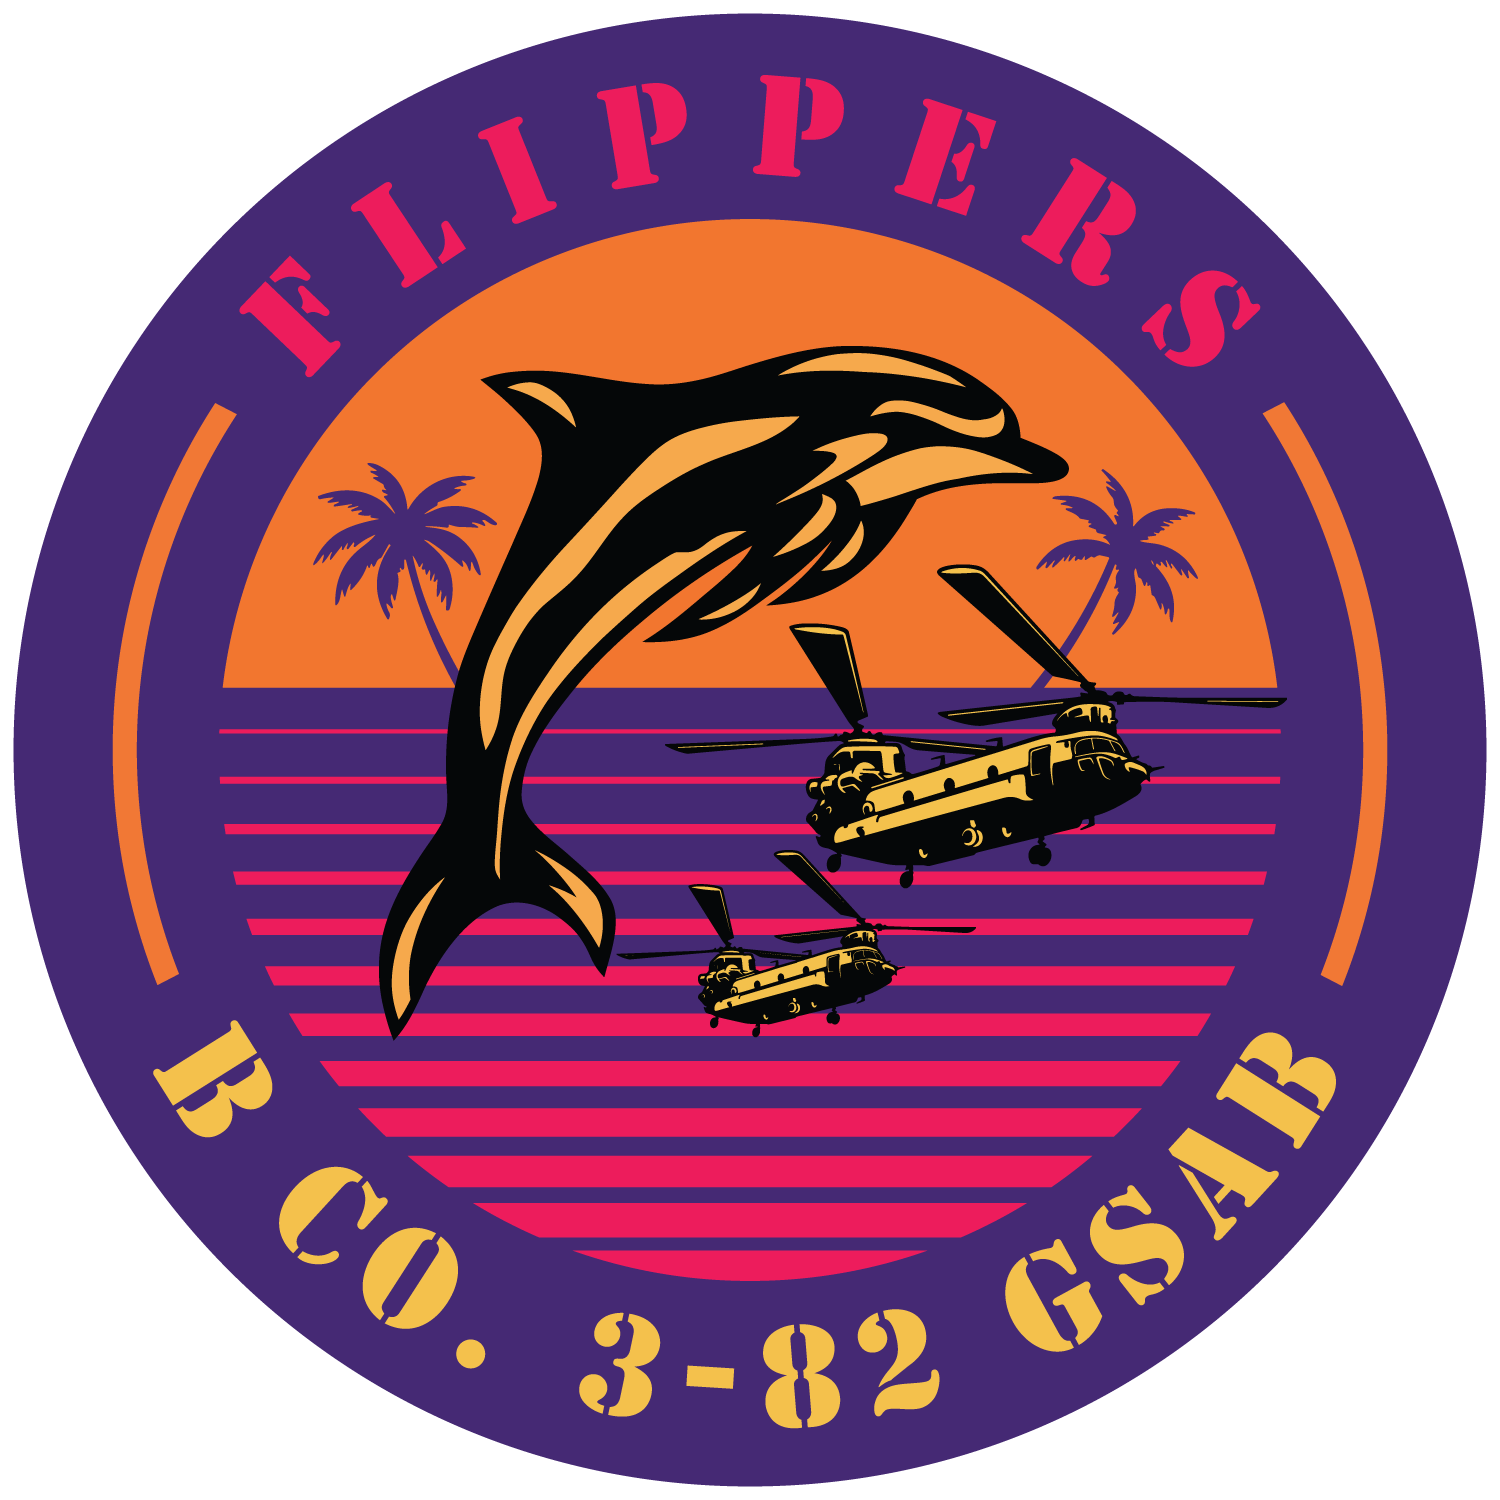 B Co, 3-82 GSAB "Flippers"